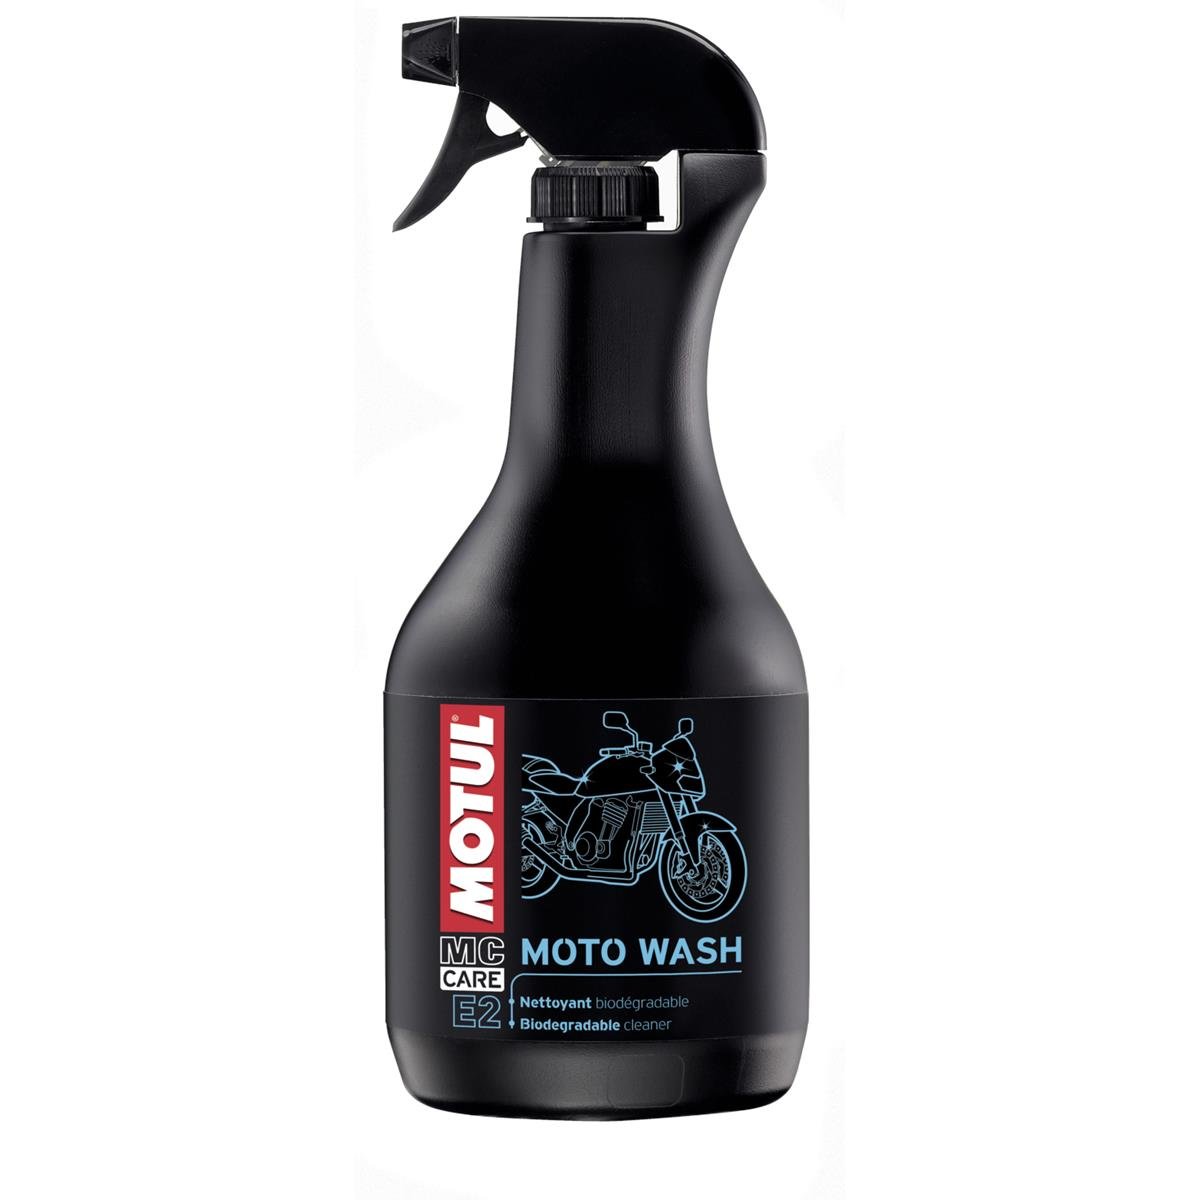 Motul Bike Cleaner Moto Wash E2 MC Care, 1 L